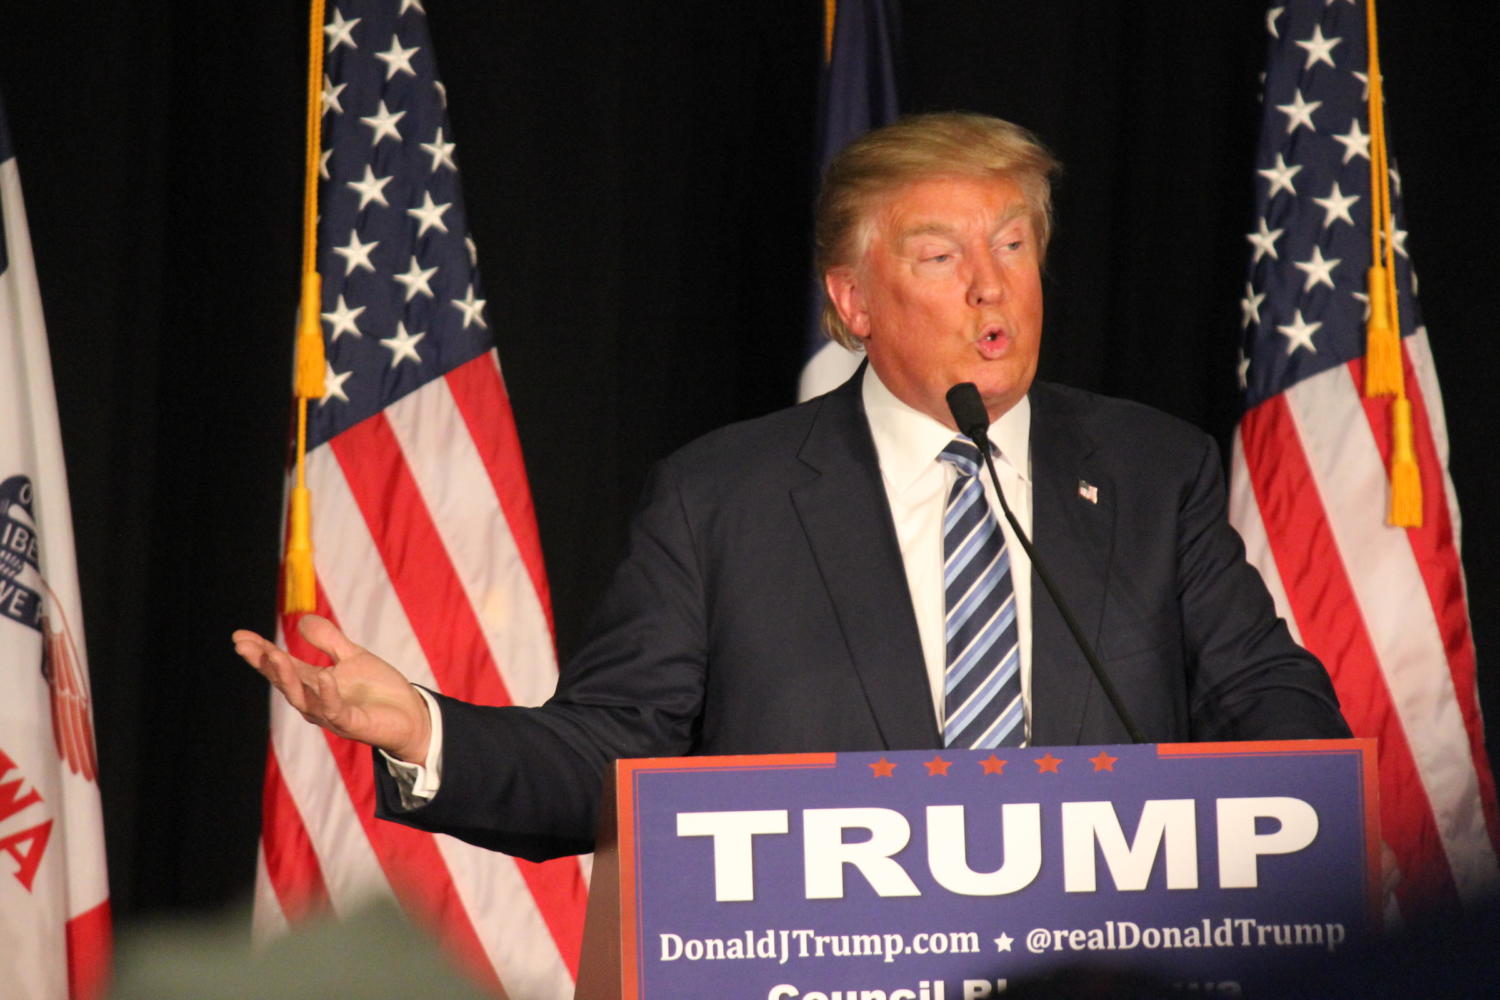 Donald Trump Ends DACA--800,000 Immigrants Affected